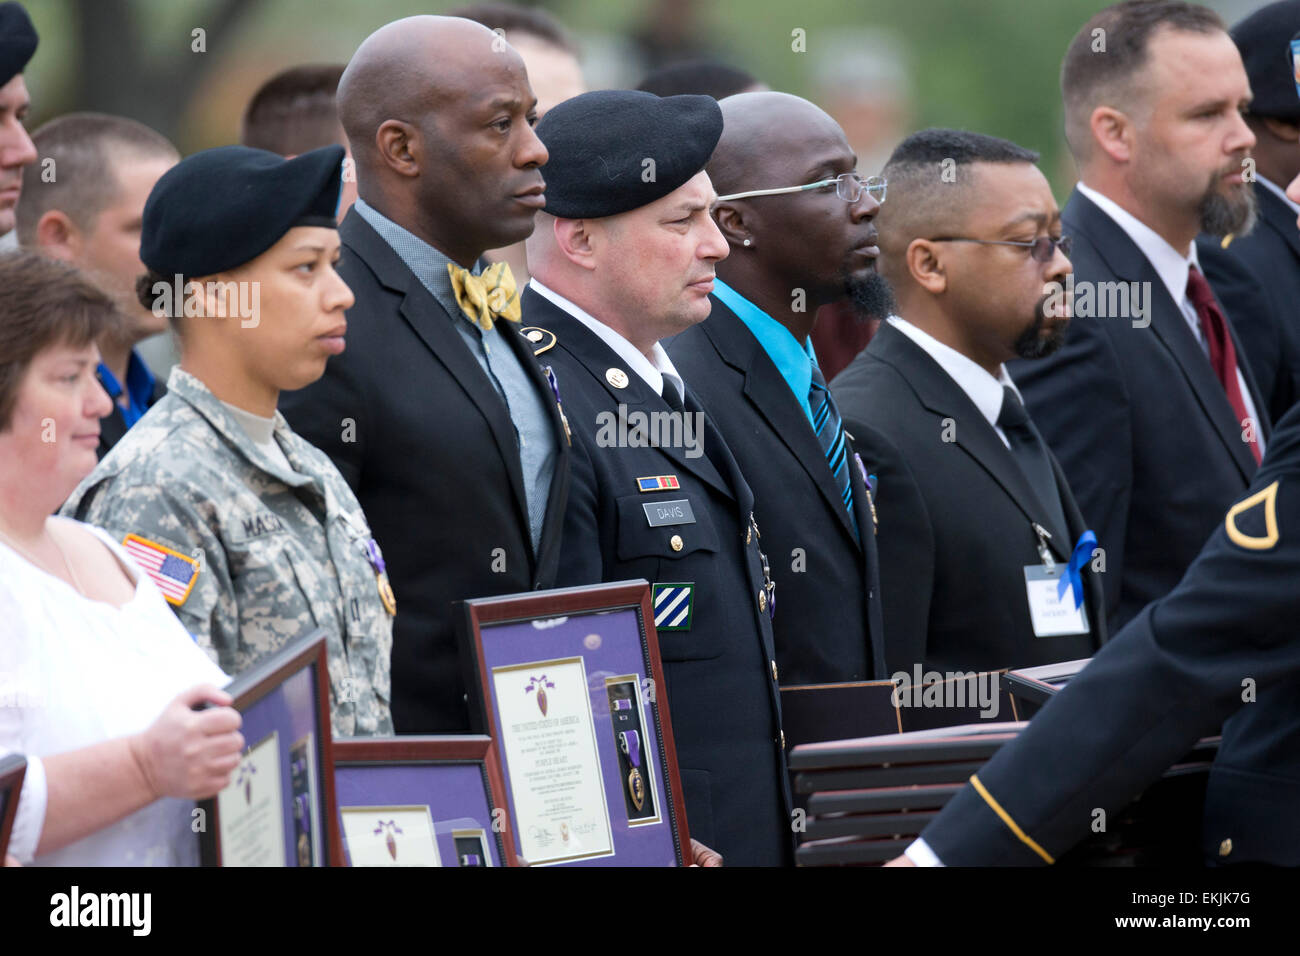 US-Armee Soldaten verwundet in 2009 Terroranschlag in Fort Hood, Texas, erhalten purpurrotes Herz Medaillen während der Zeremonie Stockfoto